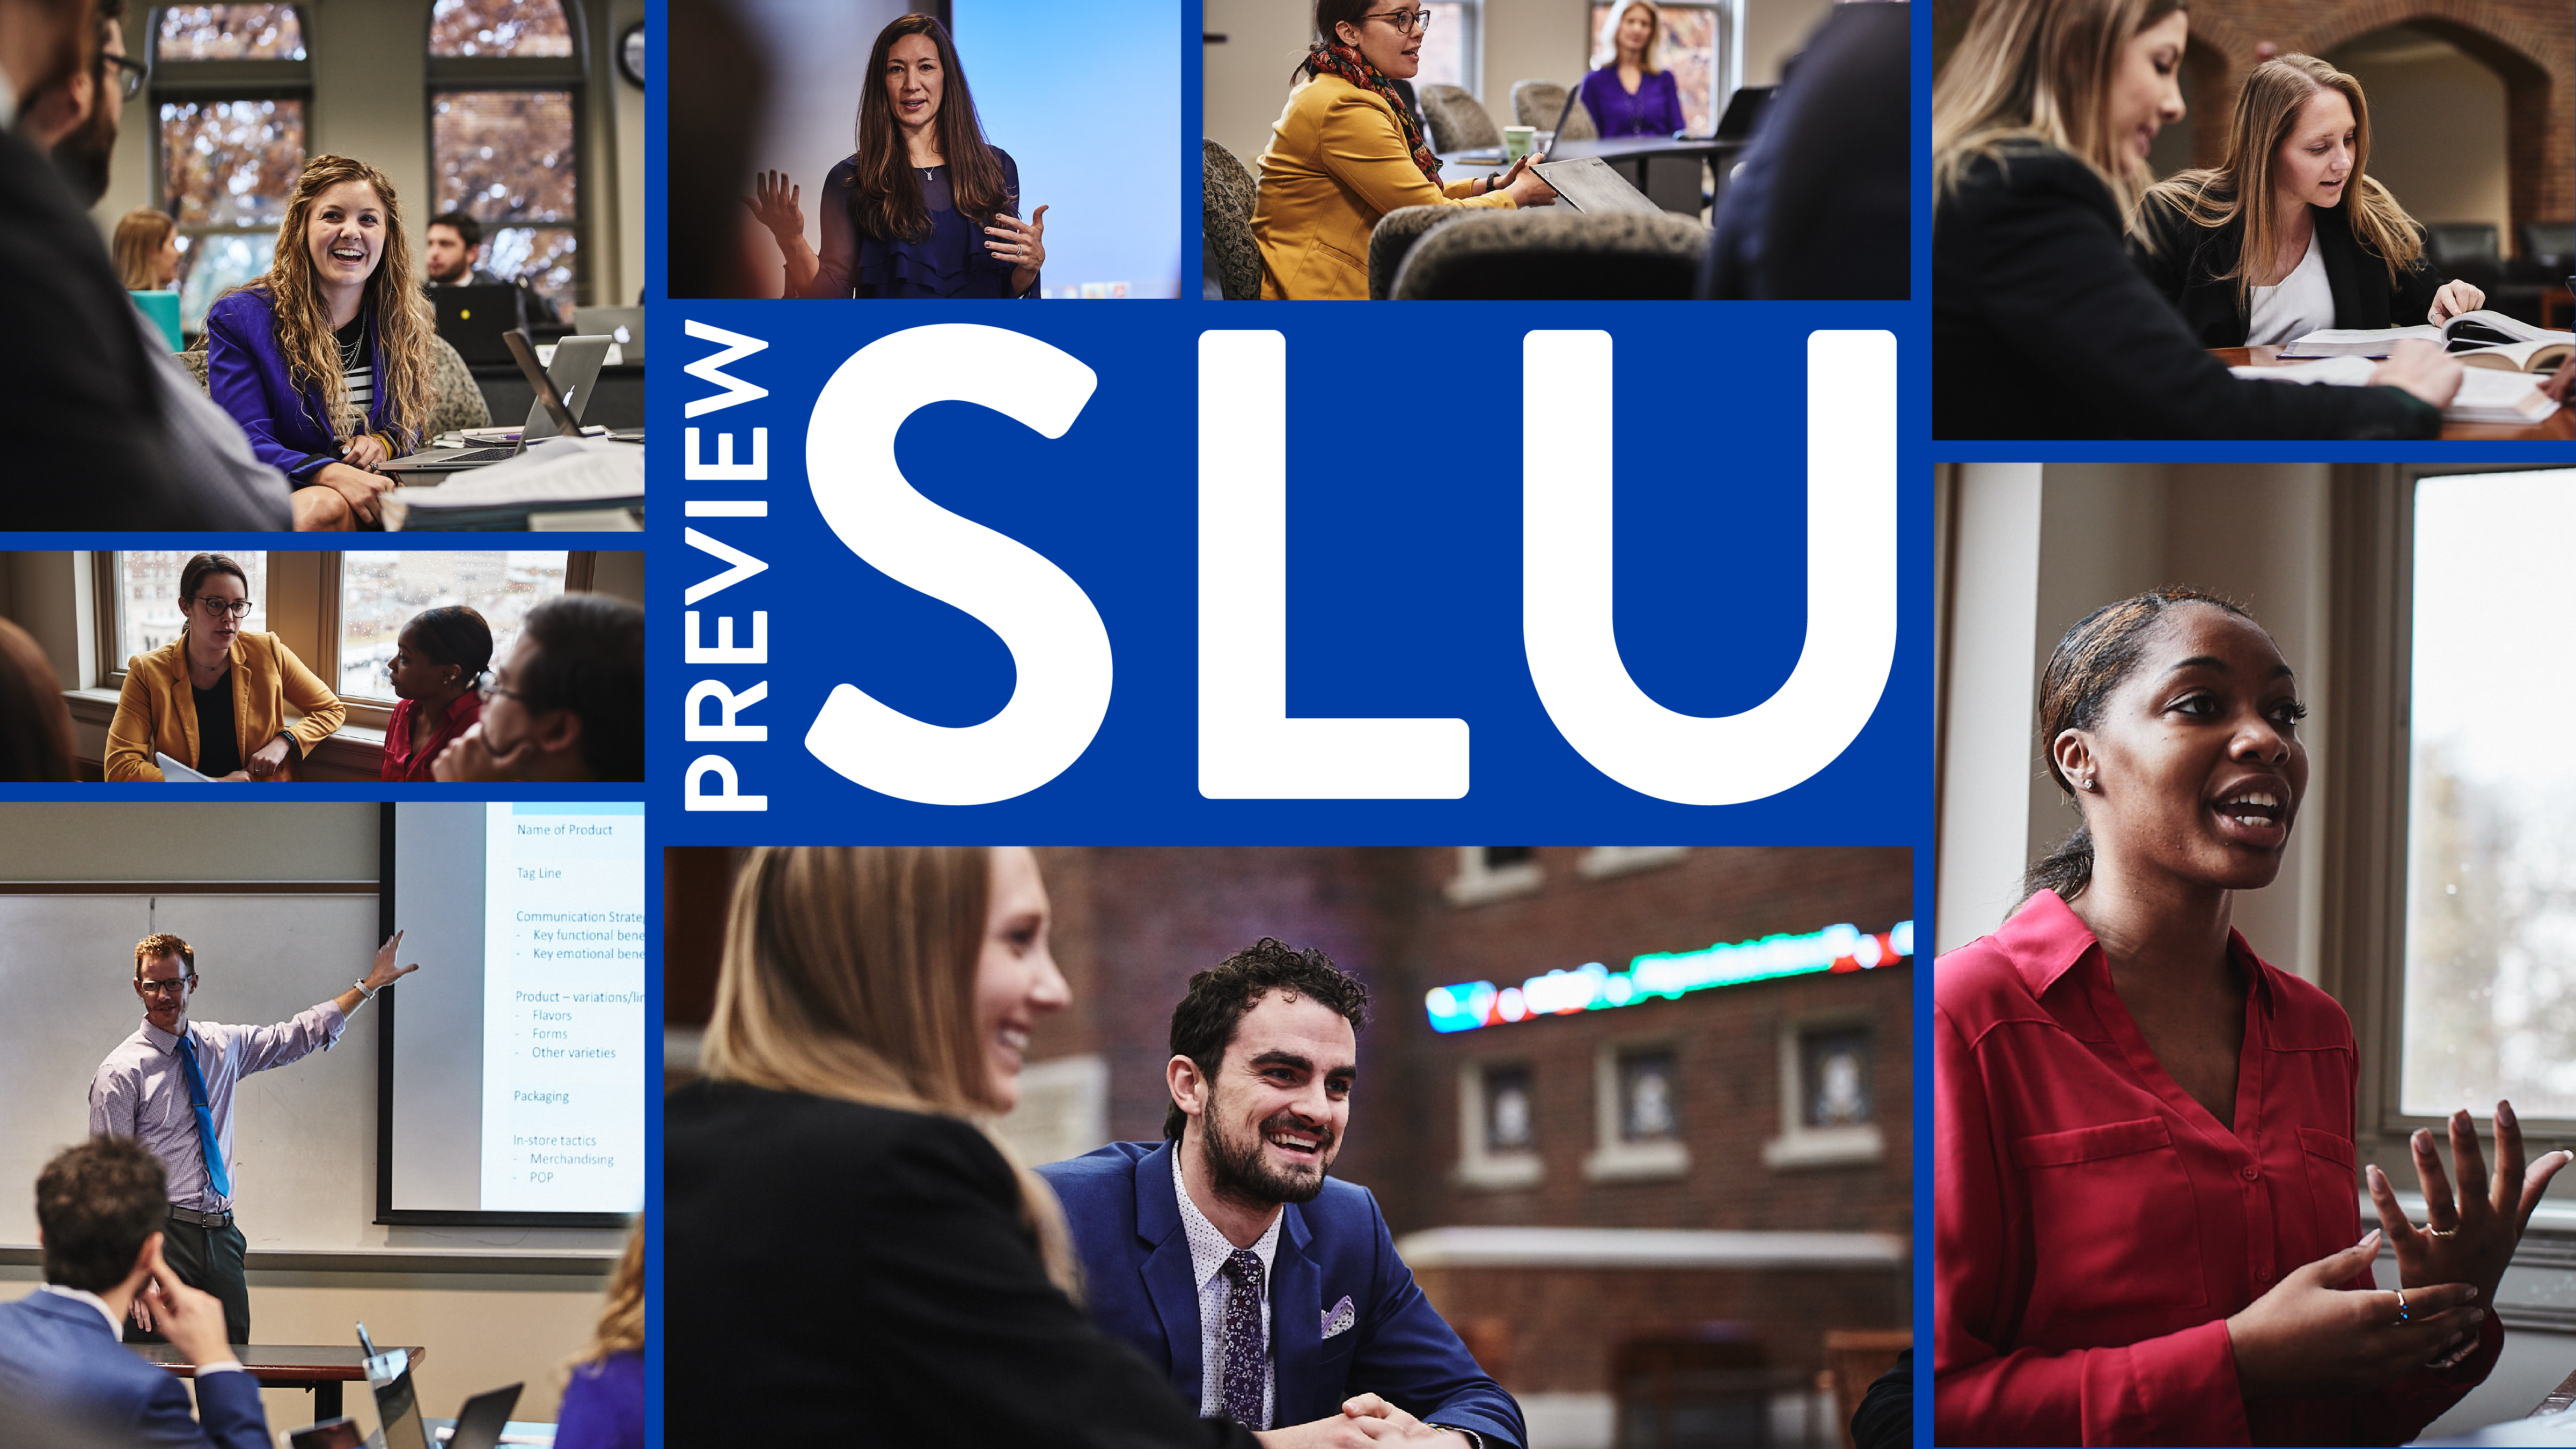 Preview SLU - Graduate Business Preview Night